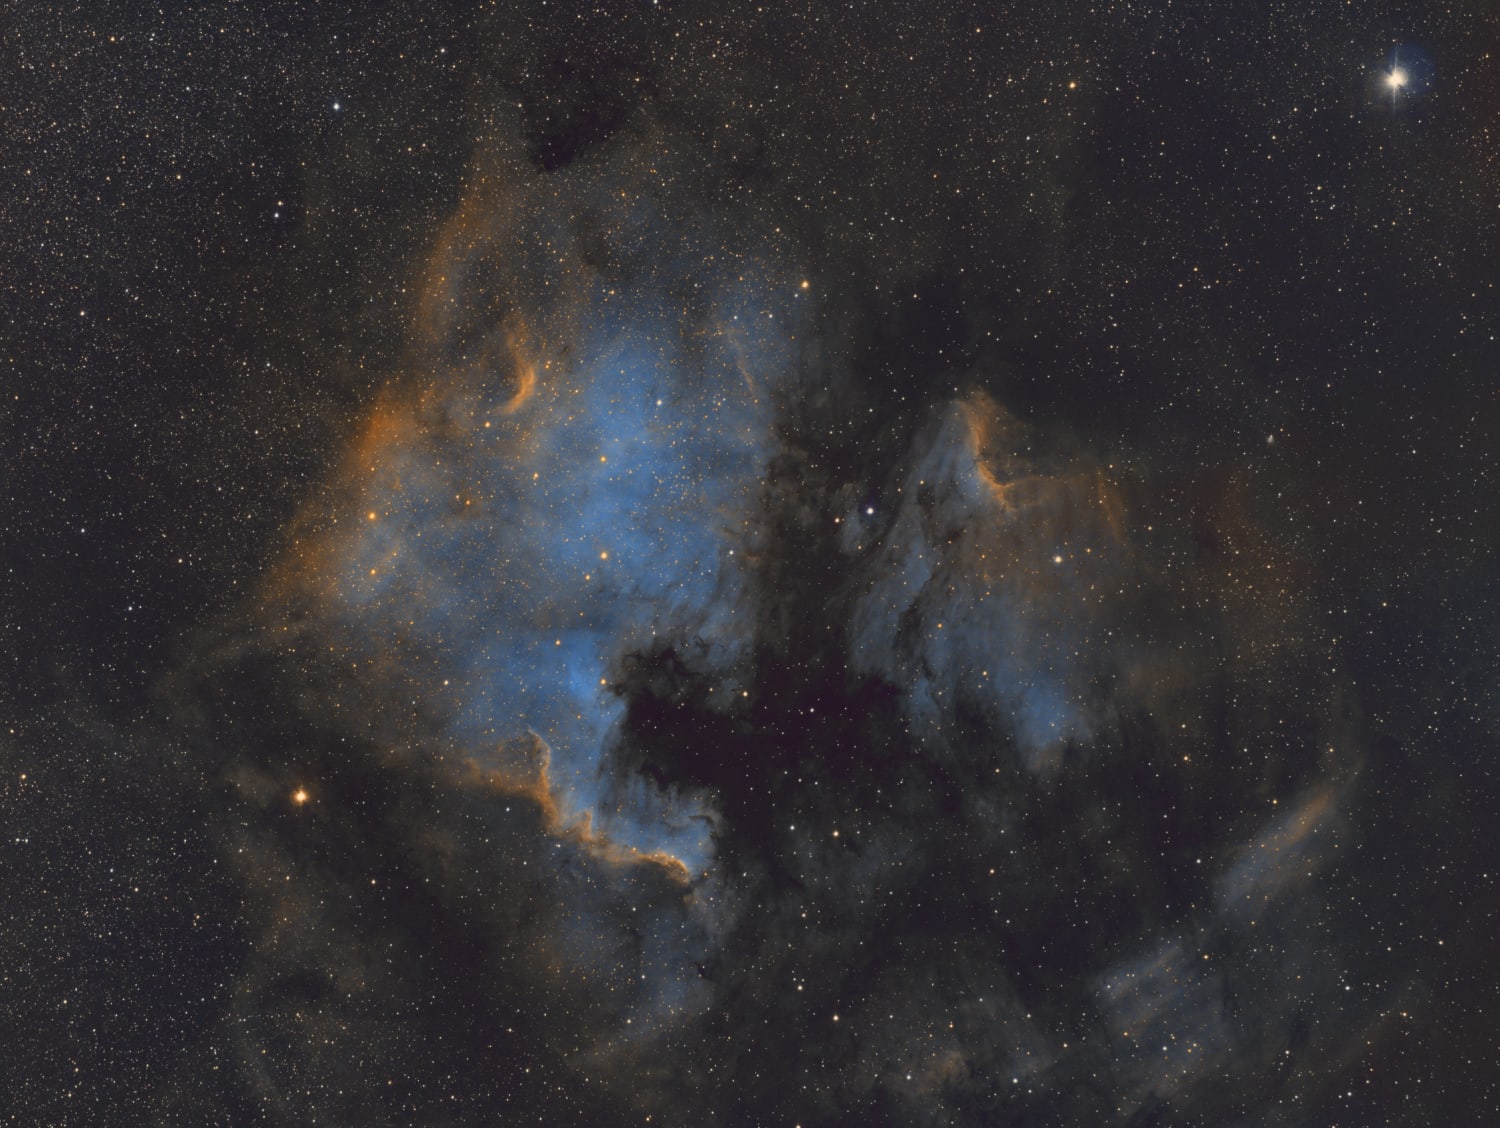 North America and Pelican Nebula in SHO